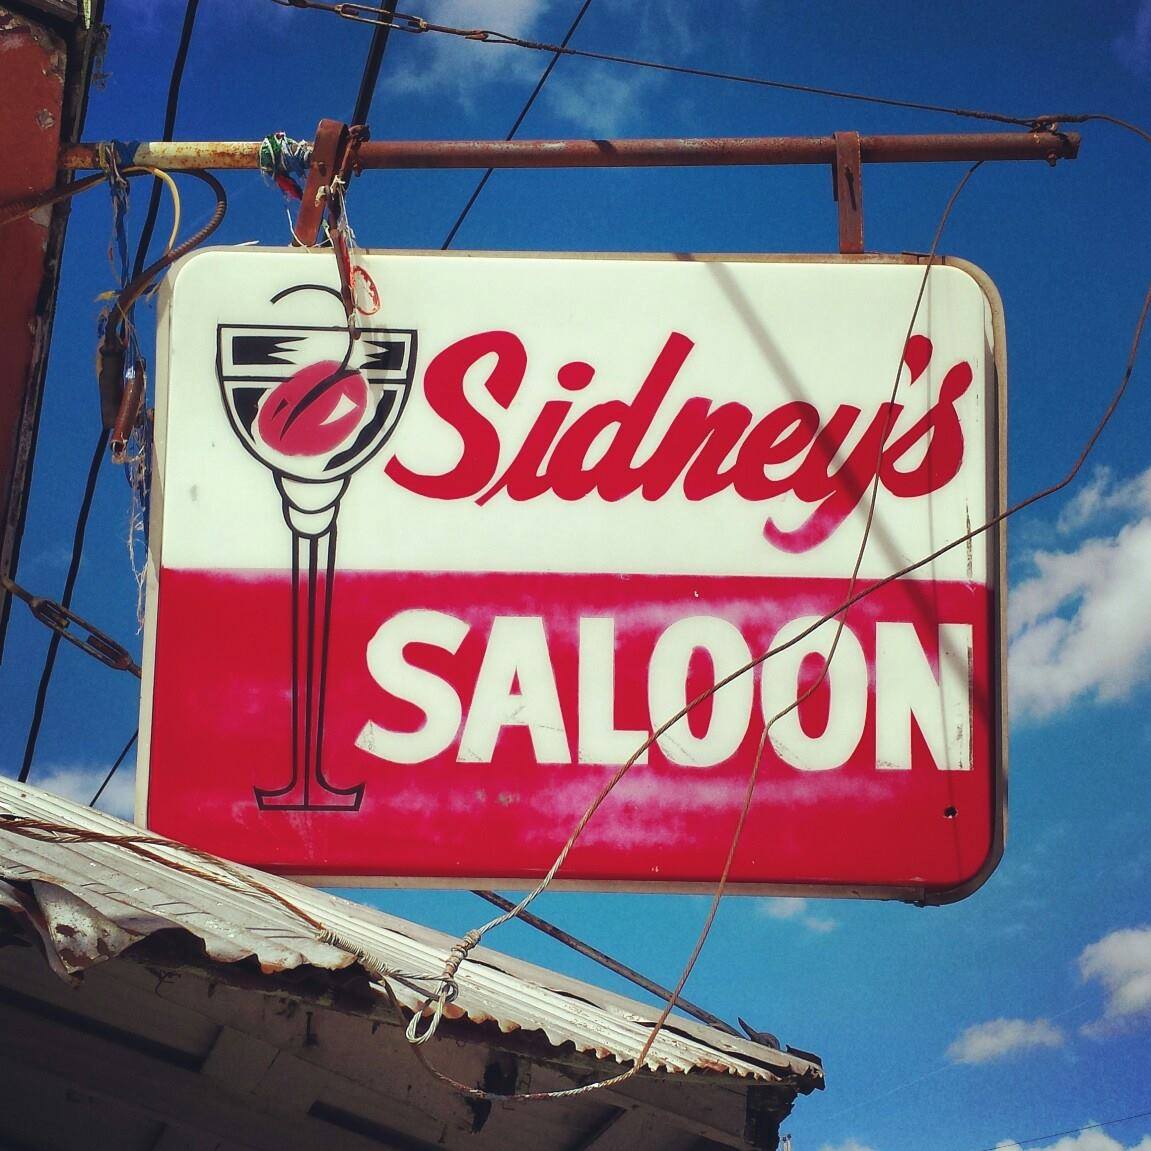 Sidney's Saloon sign